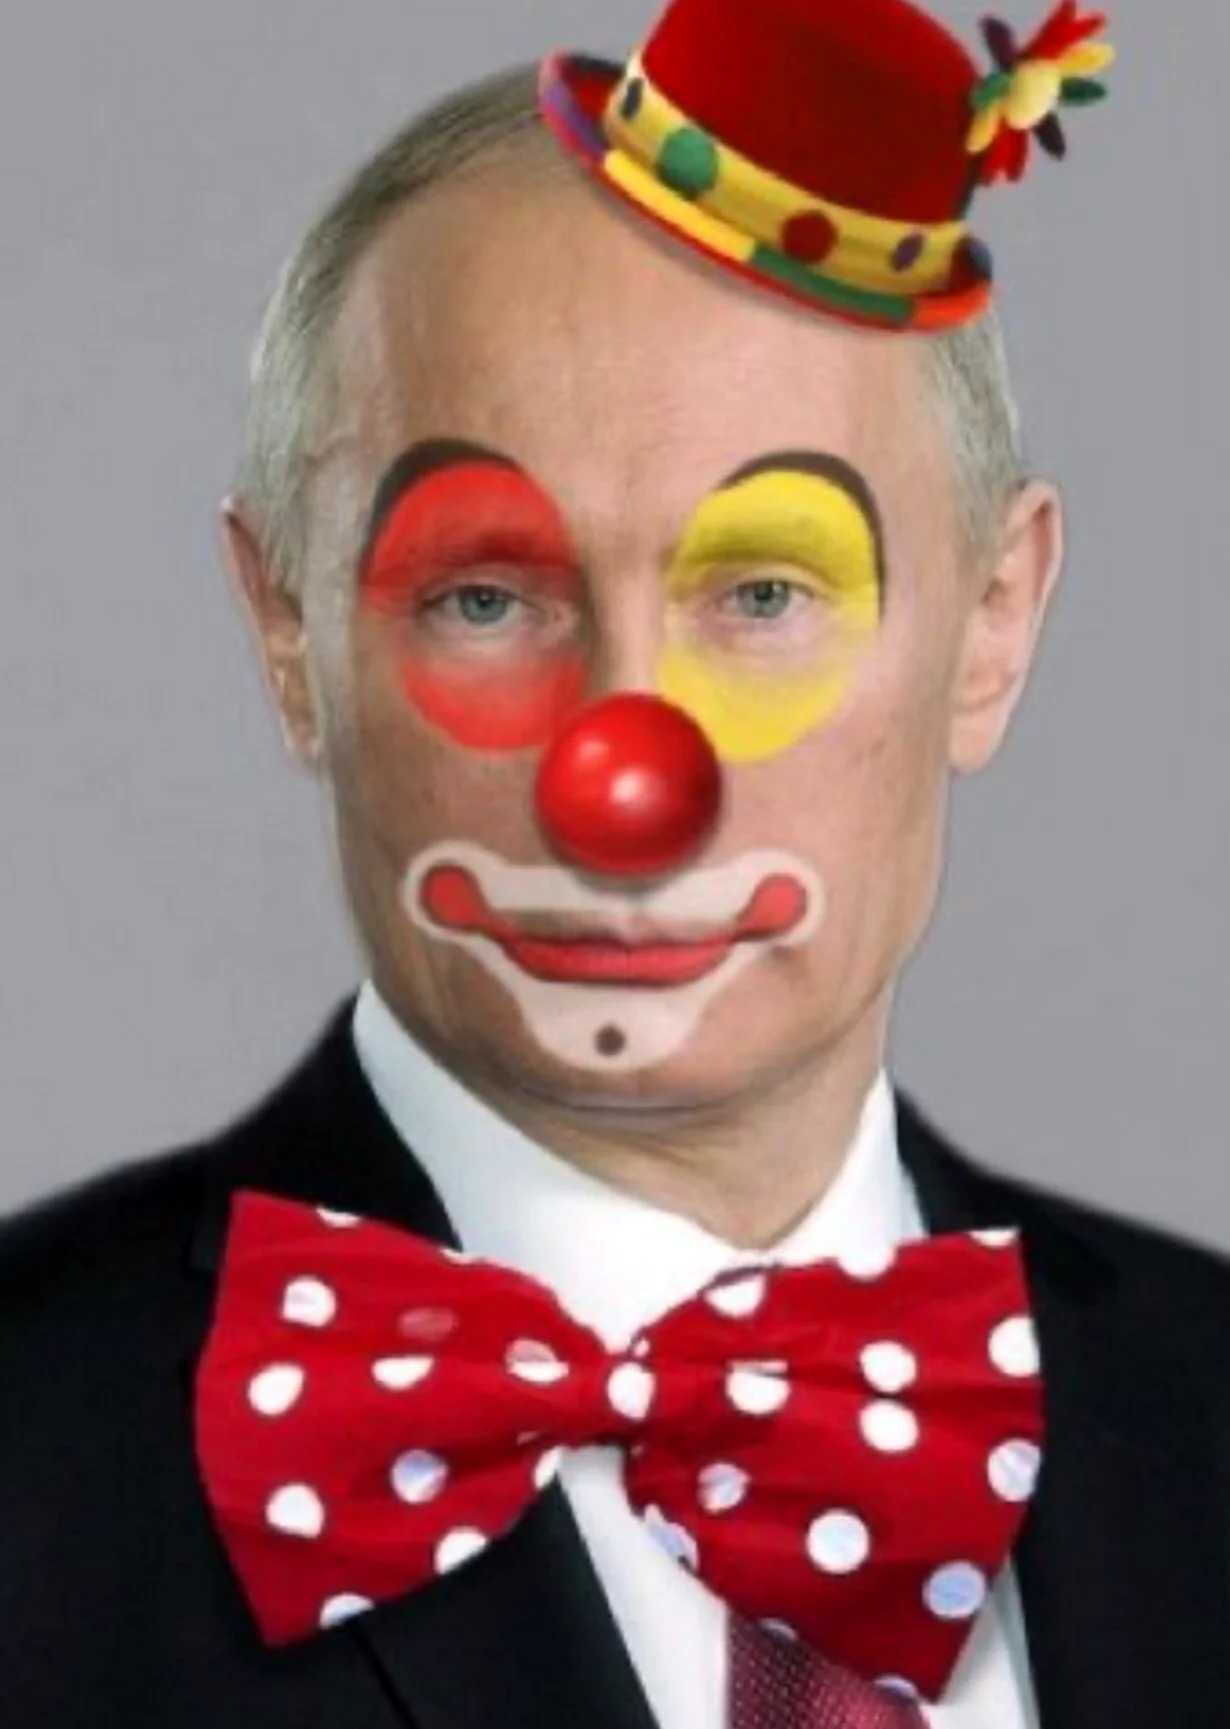 Владимир Владимирович клоун. Прикольная картинка